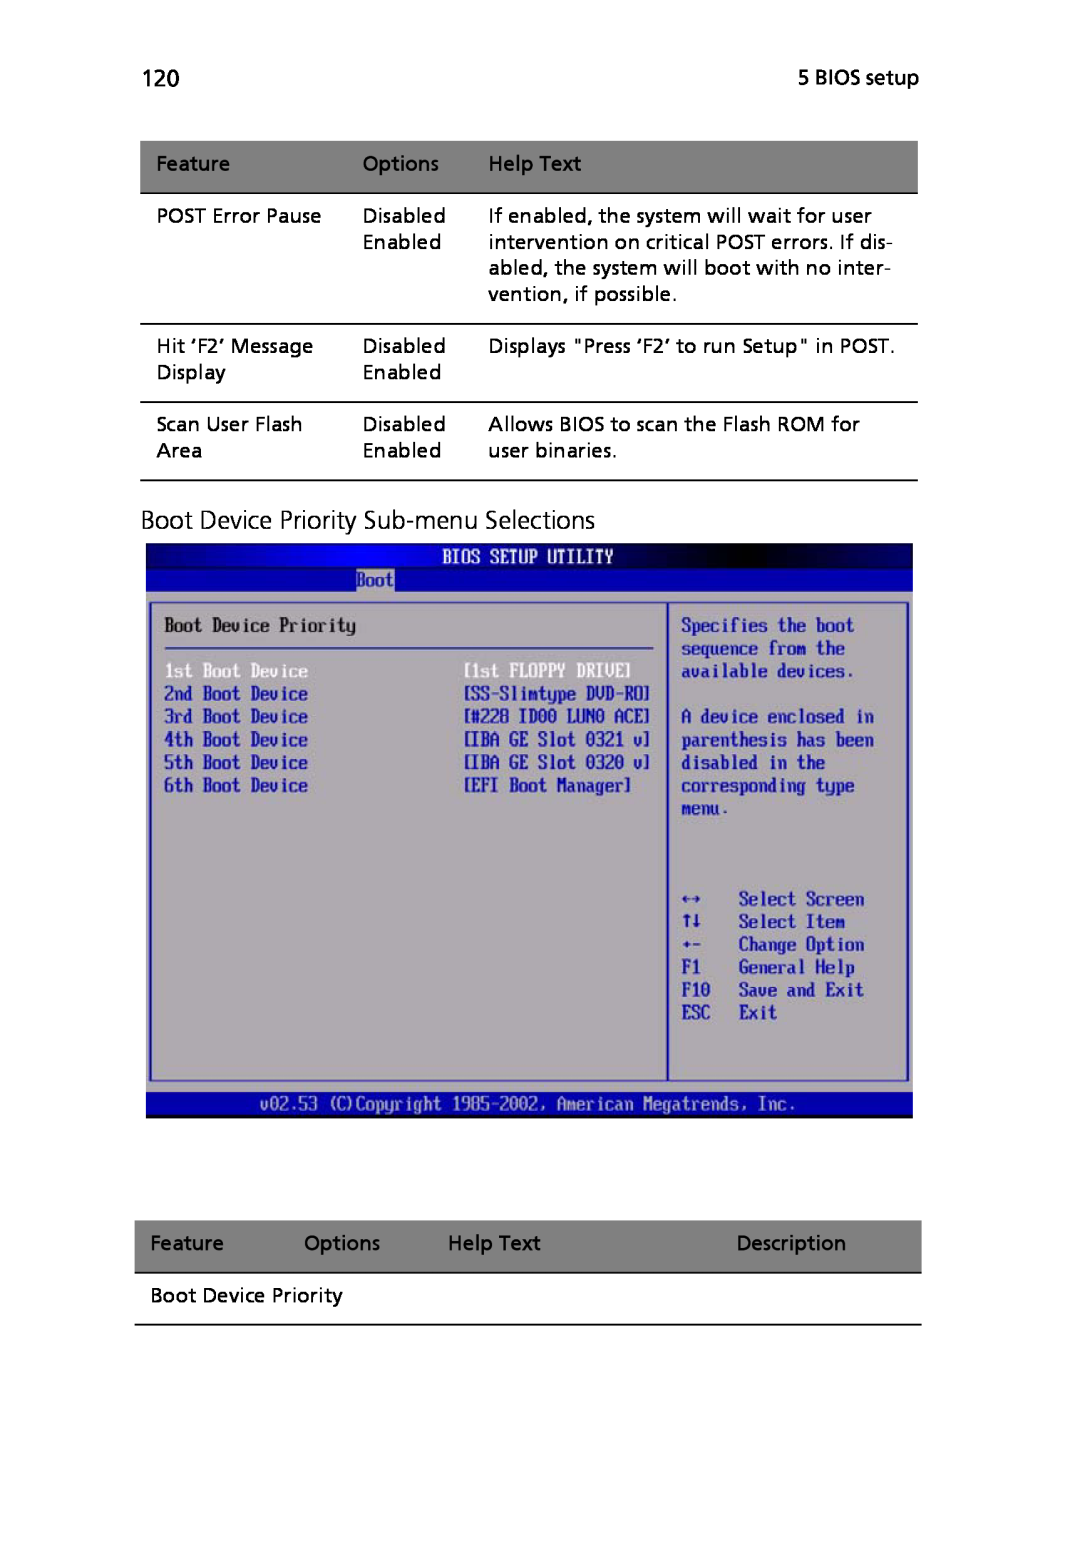 Acer Altos R710 manual Boot Device Priority Sub-menu Selections, Feature, Options, Help Text, Description 